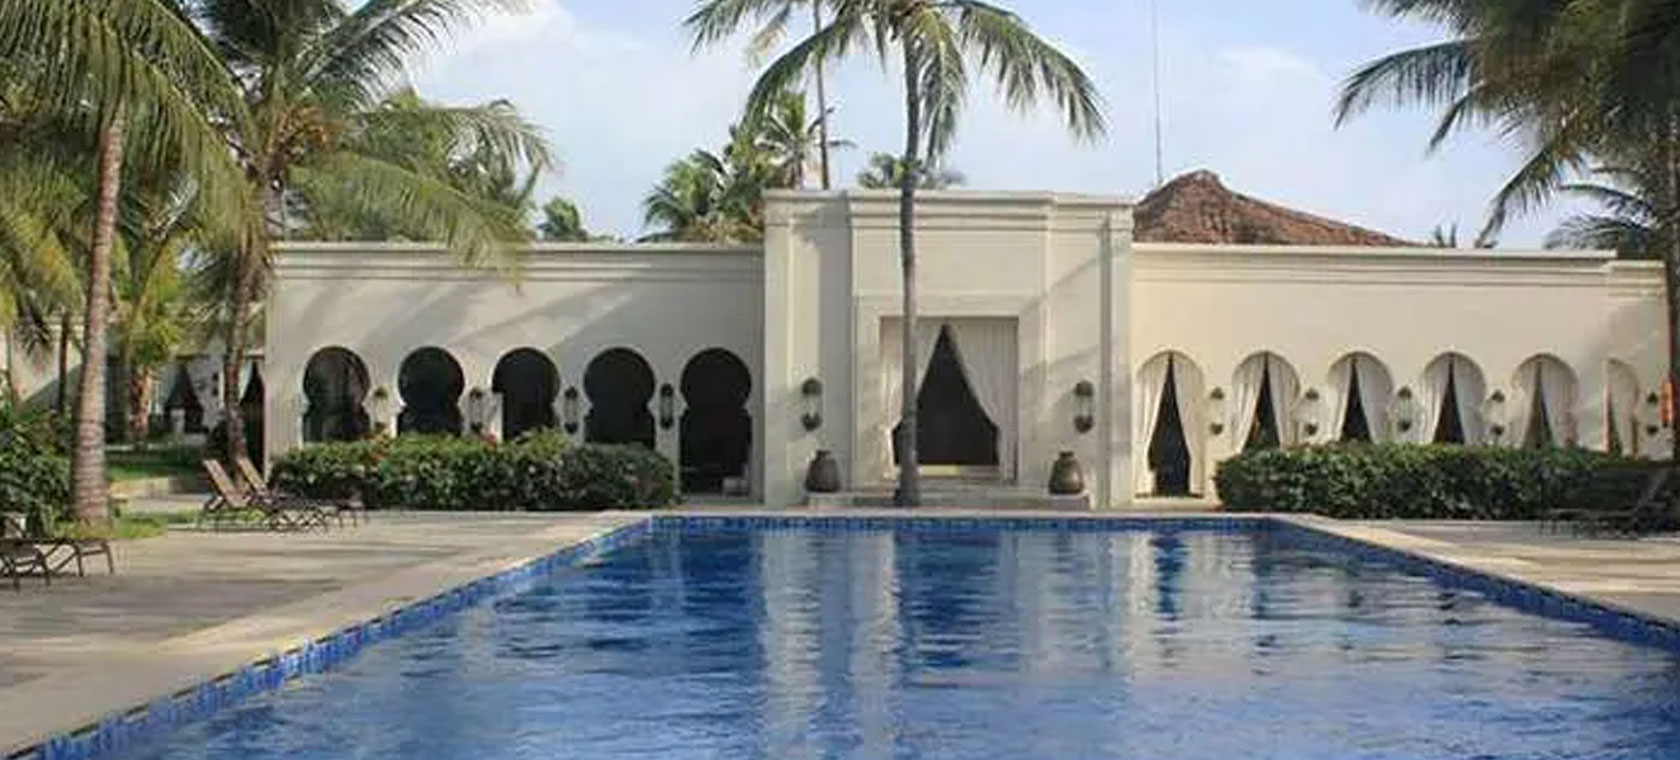 Enviable vacation in Zanzibar top hotels - businessdailyafrica.com